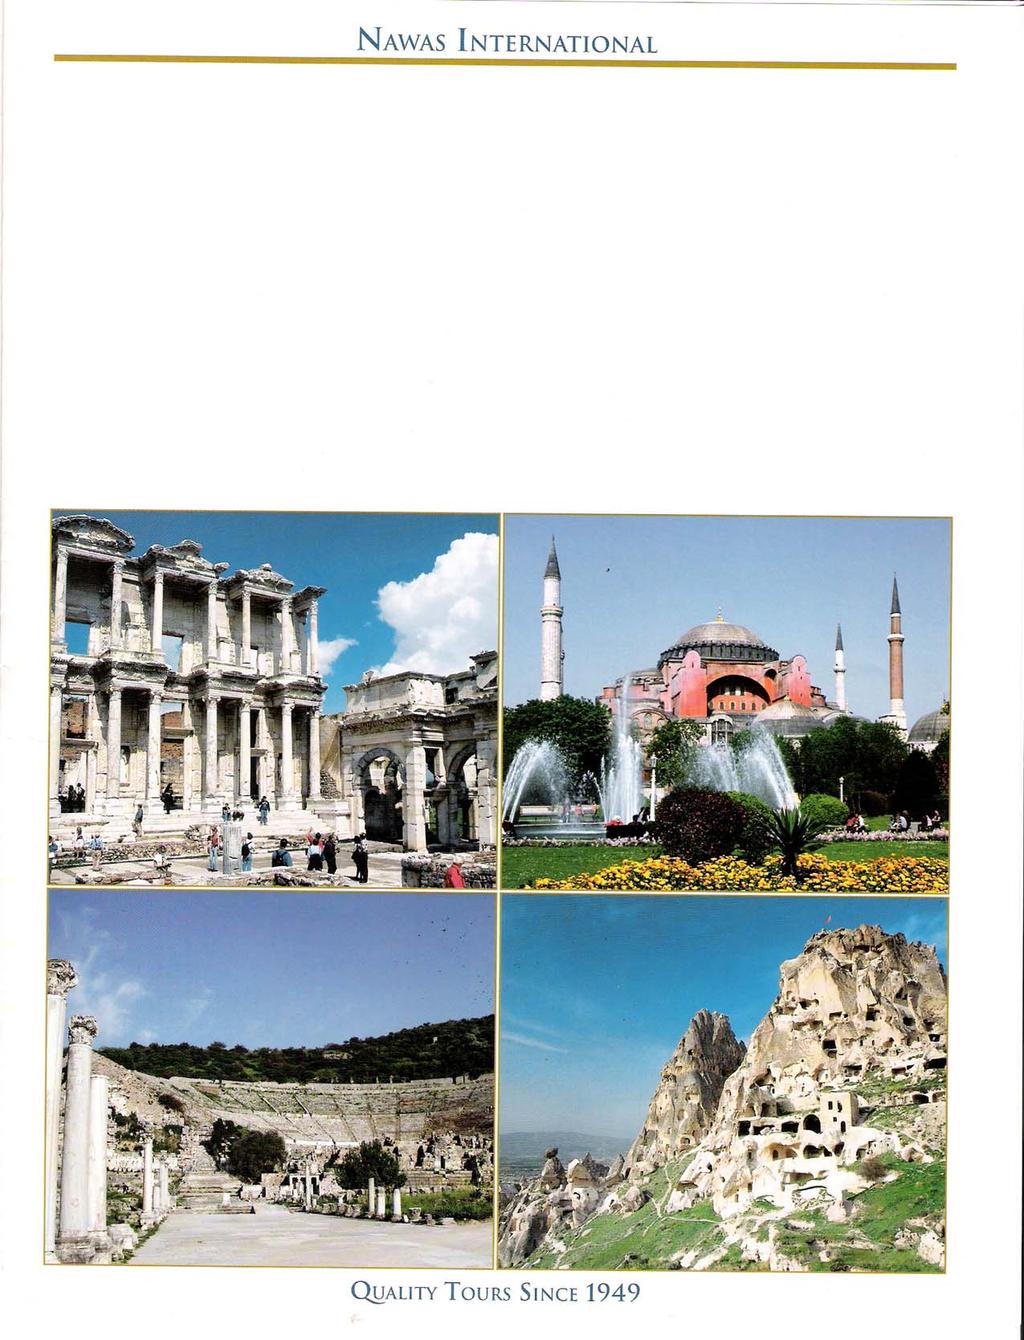 GREECE AND TURKEY In the Steps of Paul 12 Days: November 3-14, 2014 Visiting Athens Corinth Delphi Kalambaka Thessaloniki Kavala Canakkale Pergamum Izmir Pamukkale